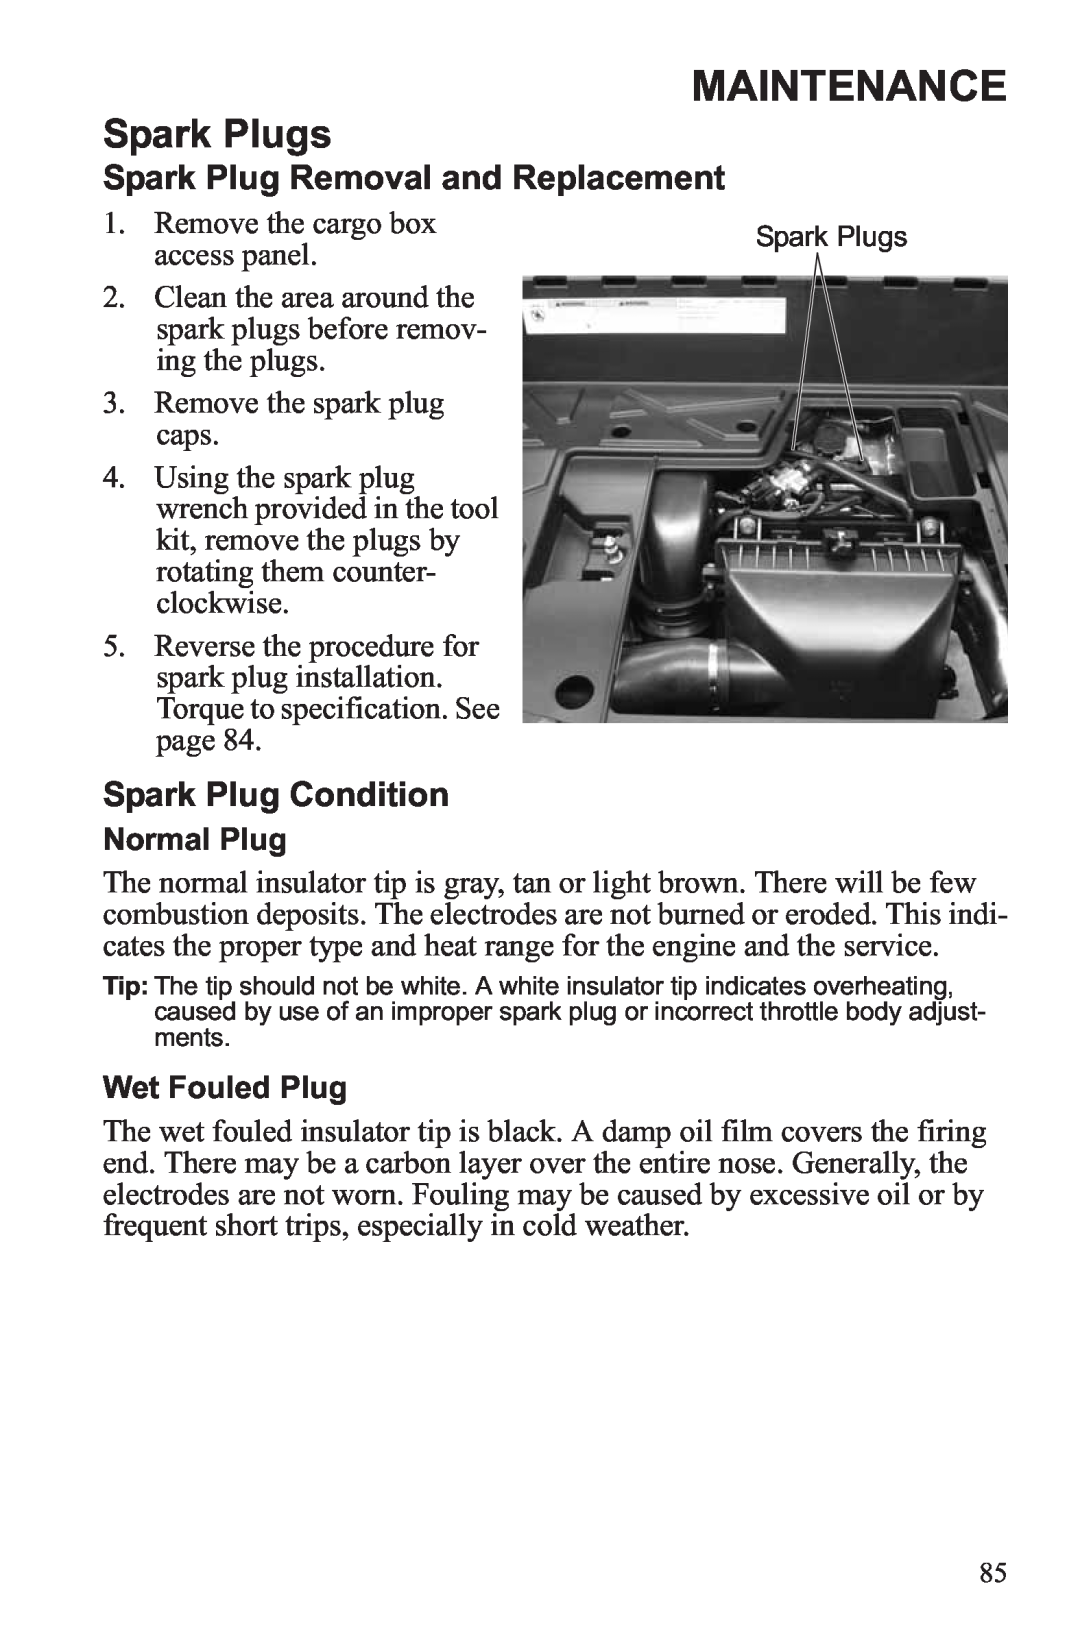 Polaris RZR XP 900 Maintenance, Spark Plug Removal and Replacement, Spark Plug Condition, Normal Plug, Wet Fouled Plug 